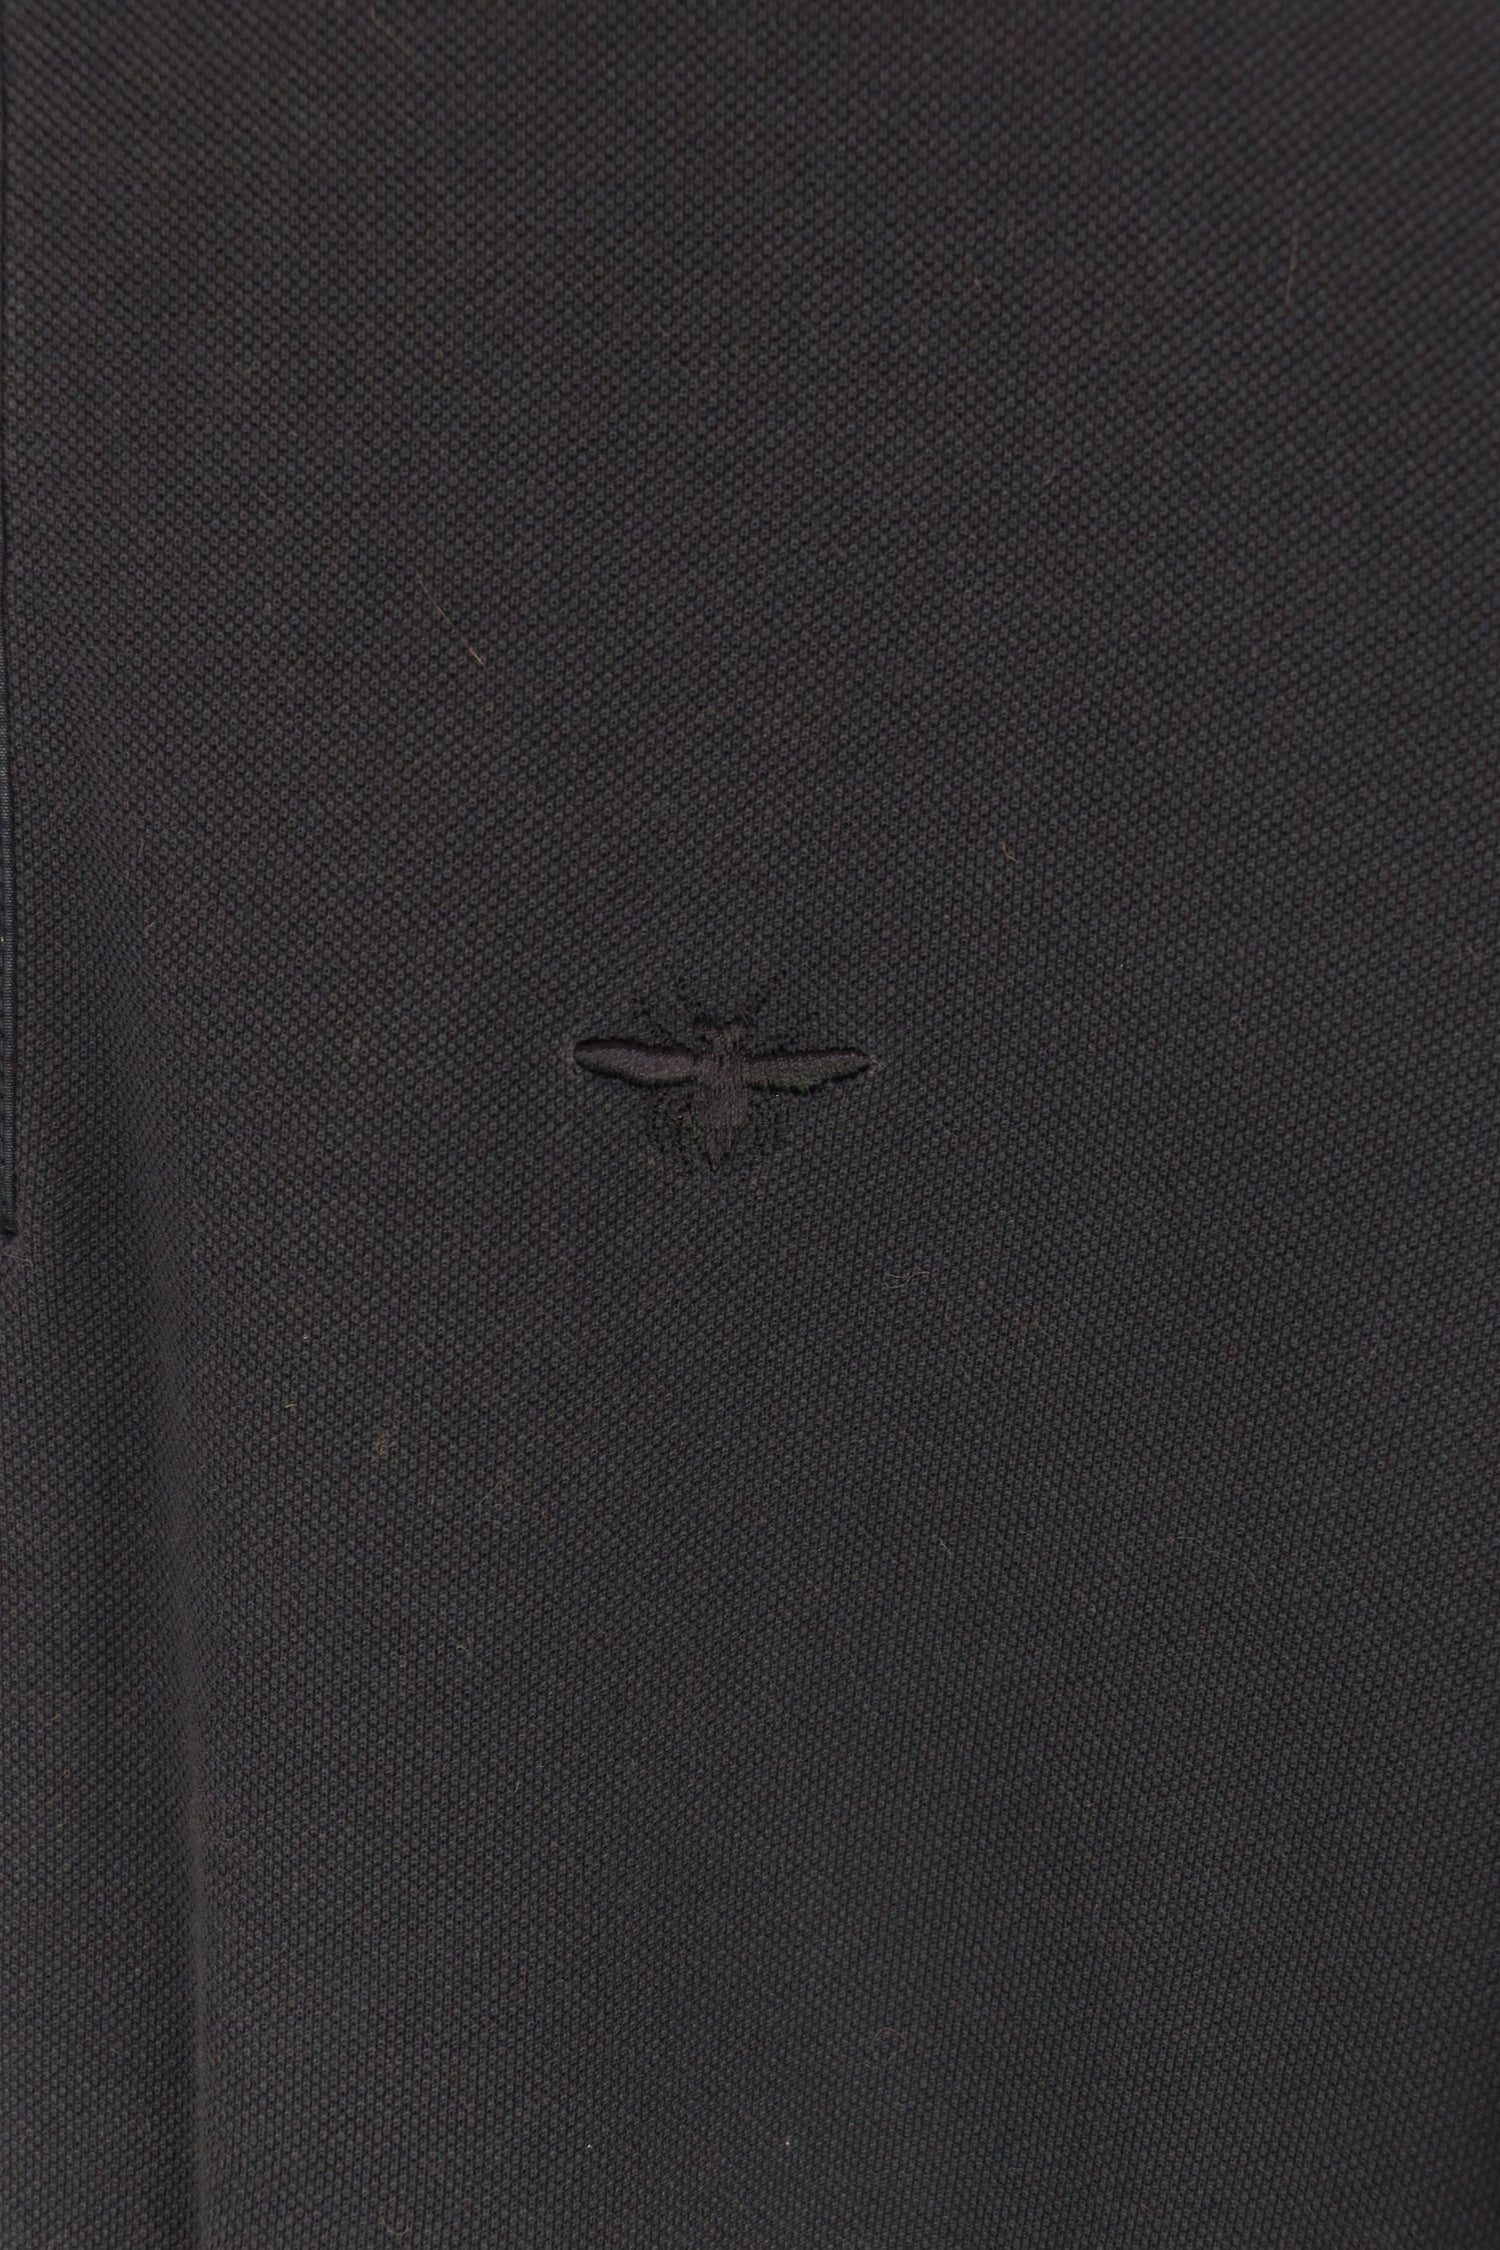 Christian Dior L/S Polo Shirt Navy Small